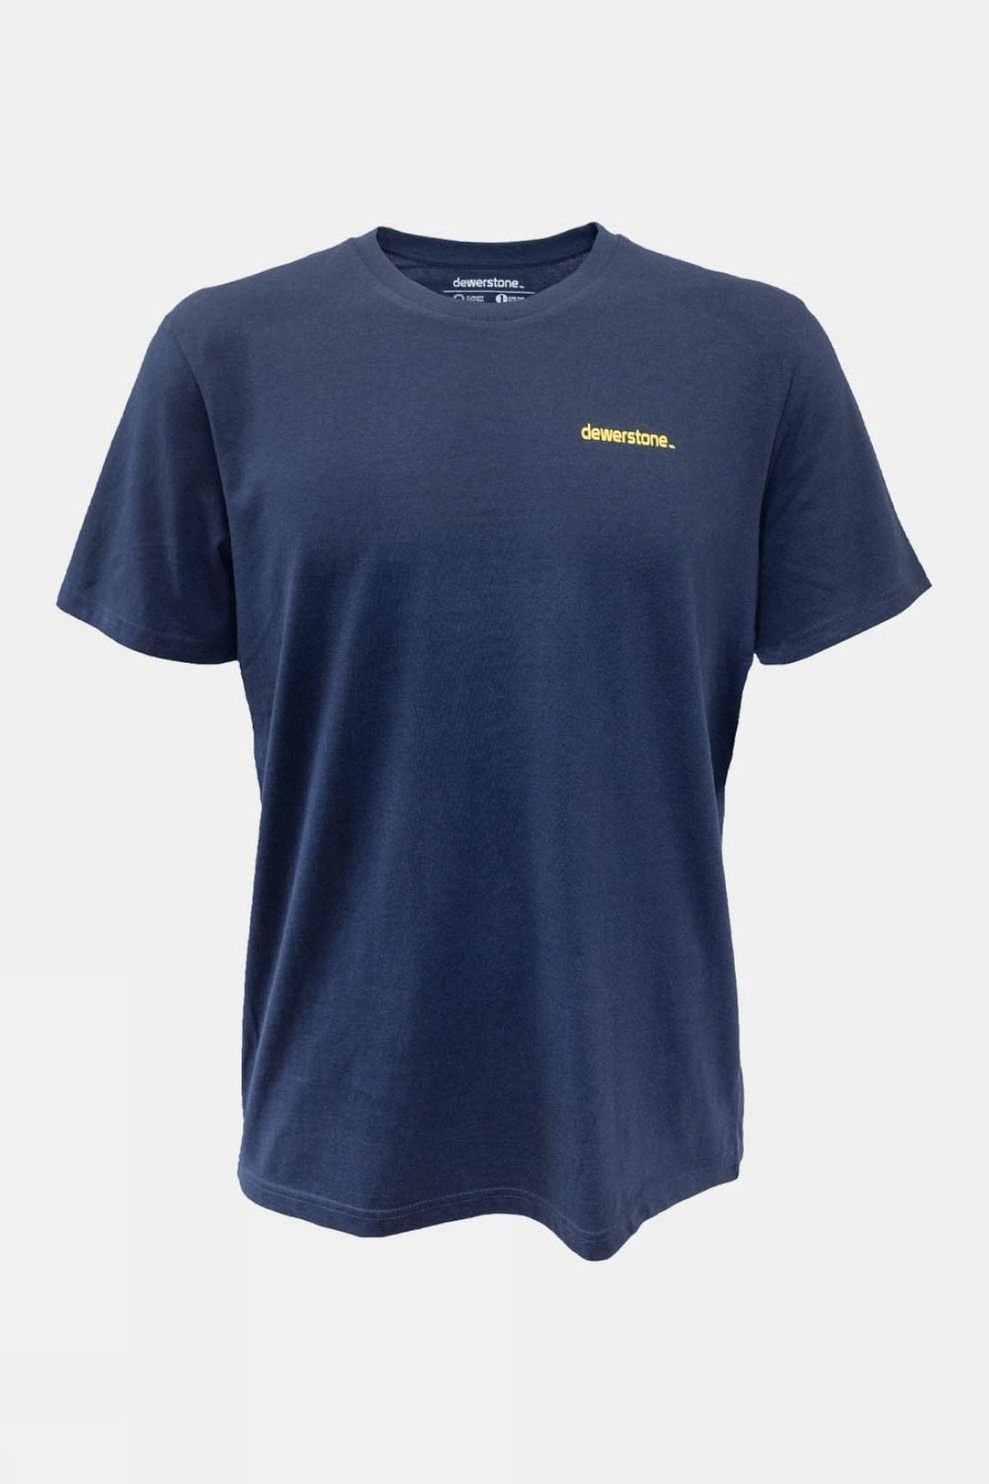 Dewerstone Mens Iconic T-Shirt